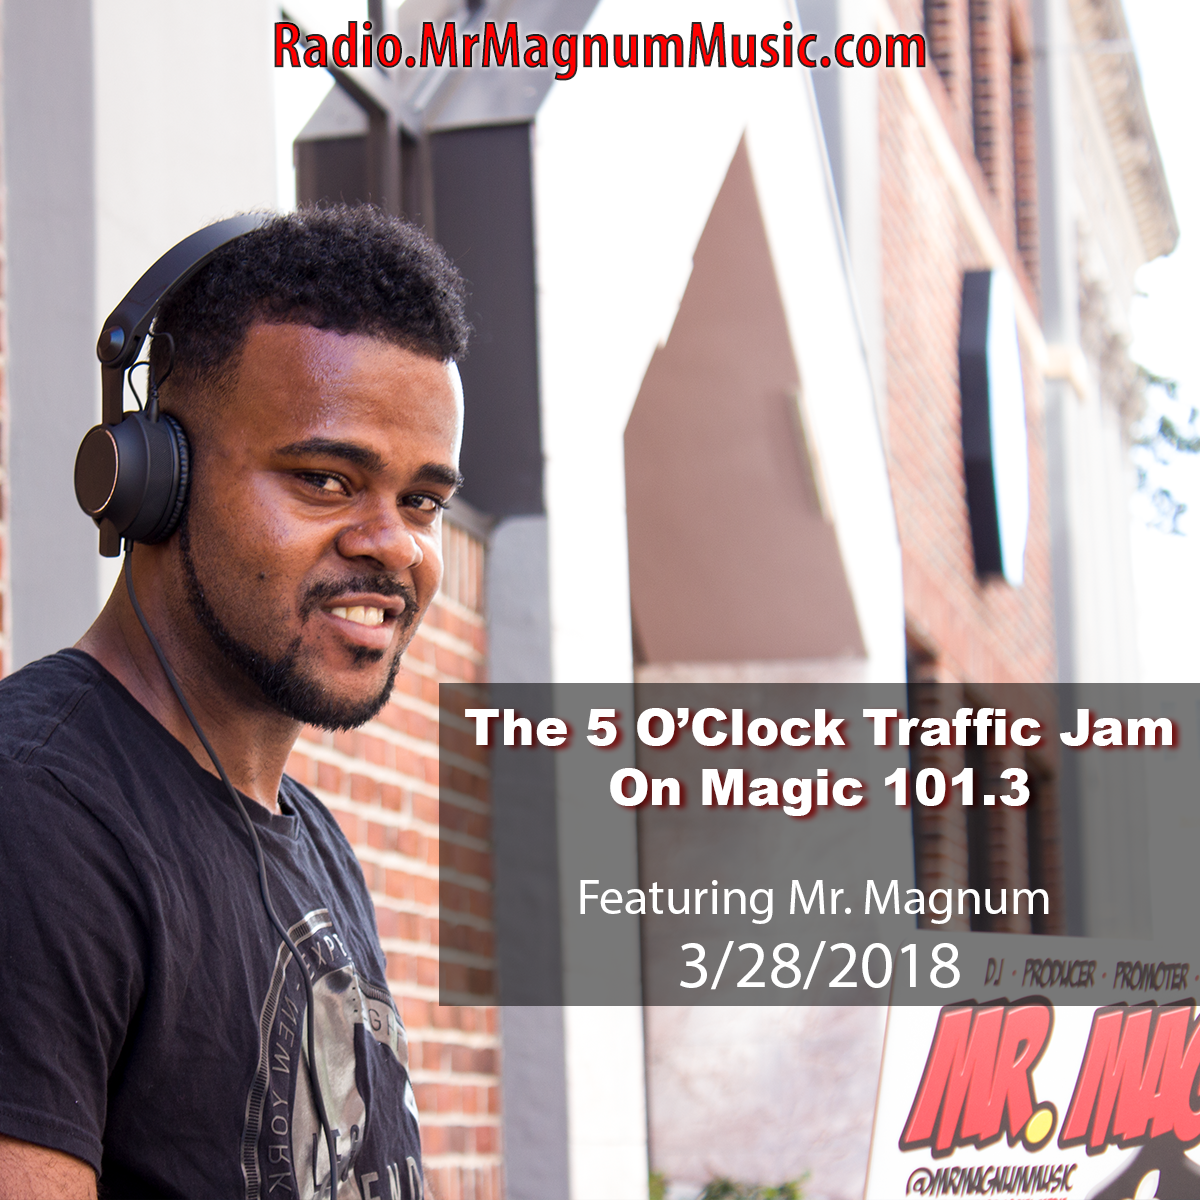 The 5 O'Clock Traffic Jam 20180328 featuring Gainesville's #1 DJ, Mr. Magnum on Magic 101.3